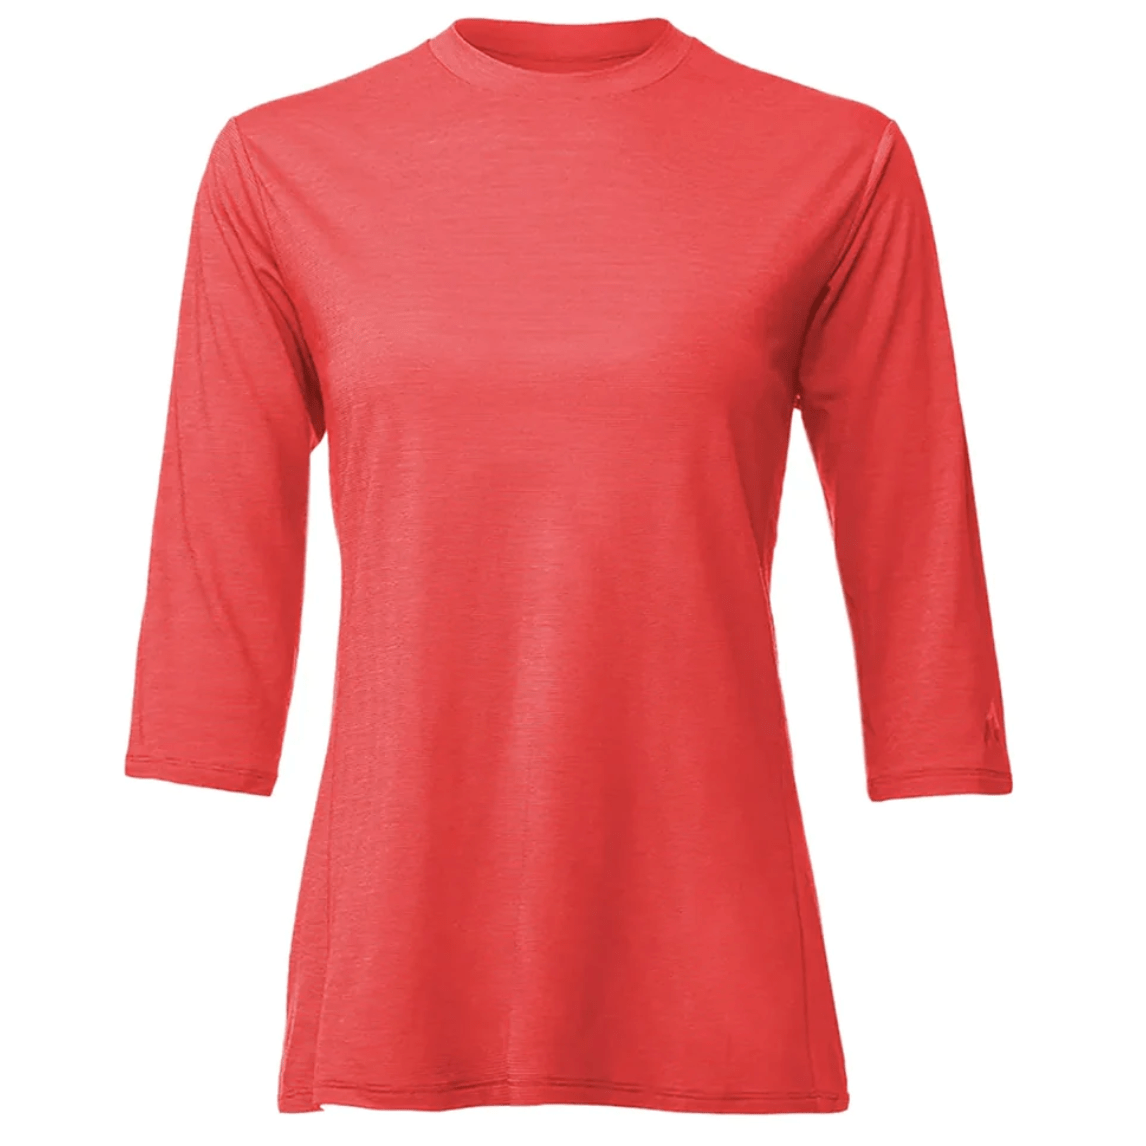 7mesh Women's Desperado Shirt 3/4 Raspberry L Apparel - Clothing - Women's Jerseys - Mountain